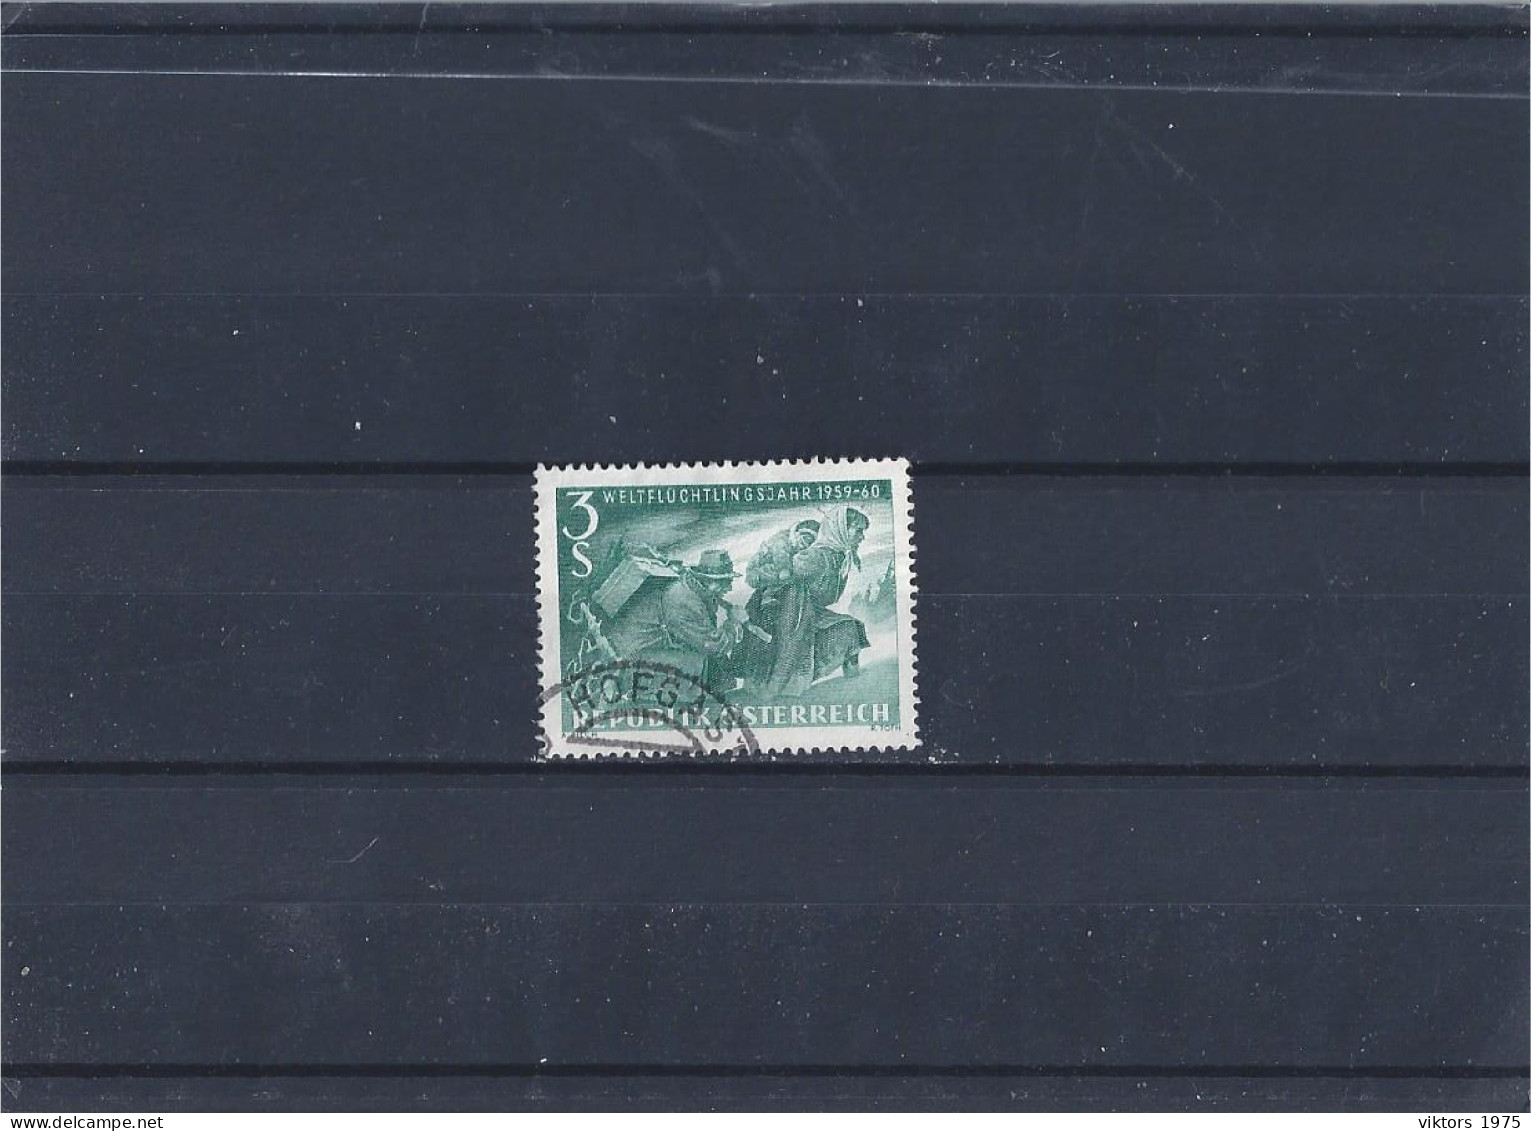 Used Stamp Nr.1074 In MICHEL Catalog - Gebraucht